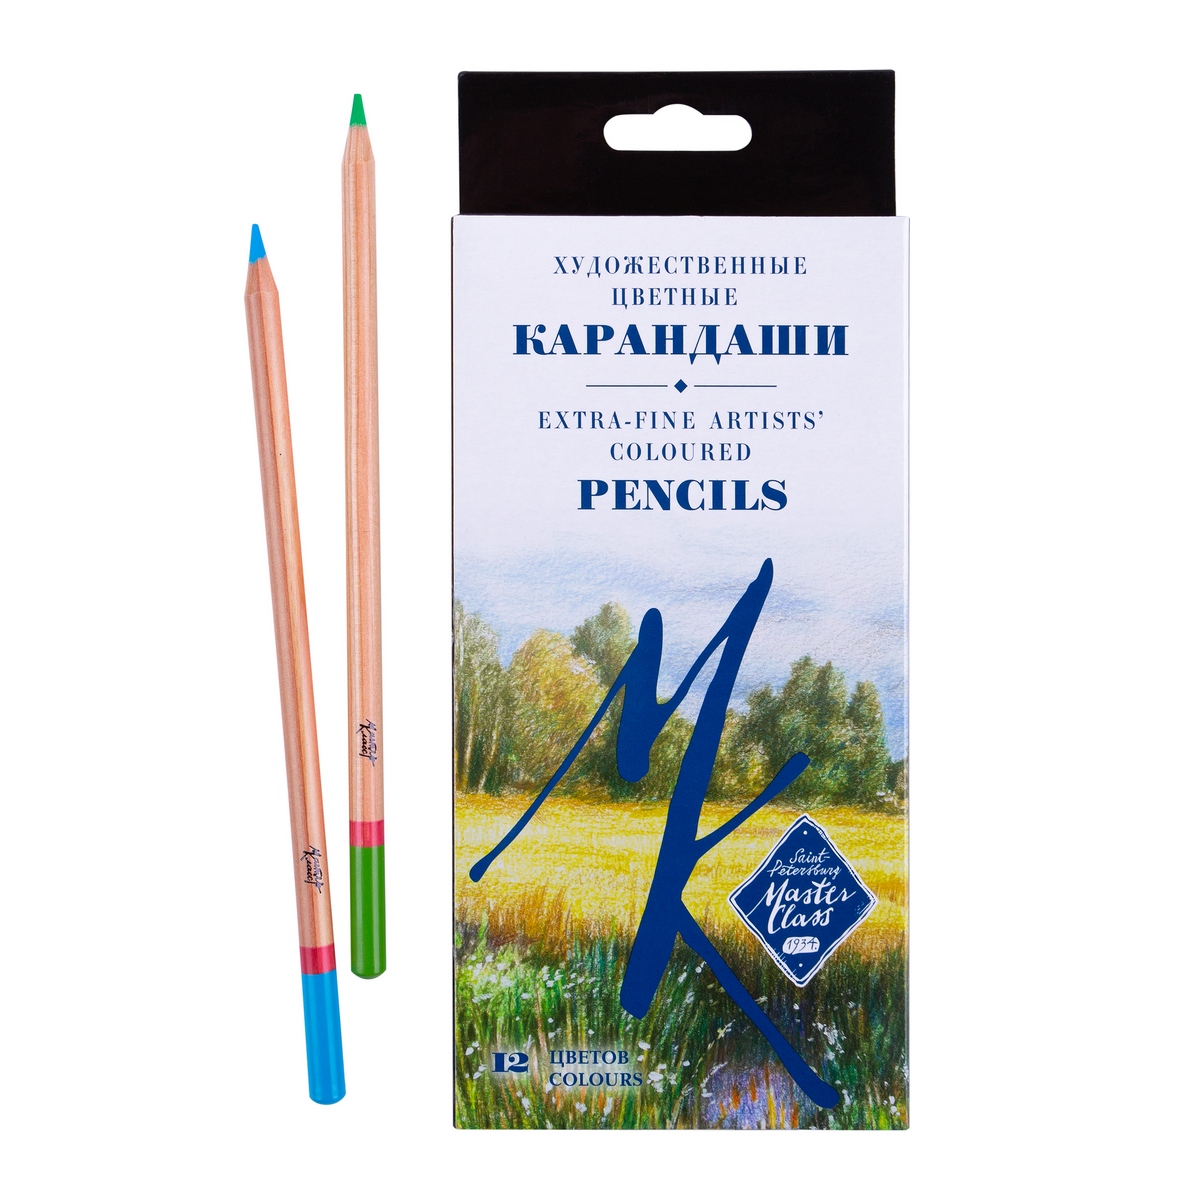 Extra-fine artists' coloured pencils "Master Class" set, carton box